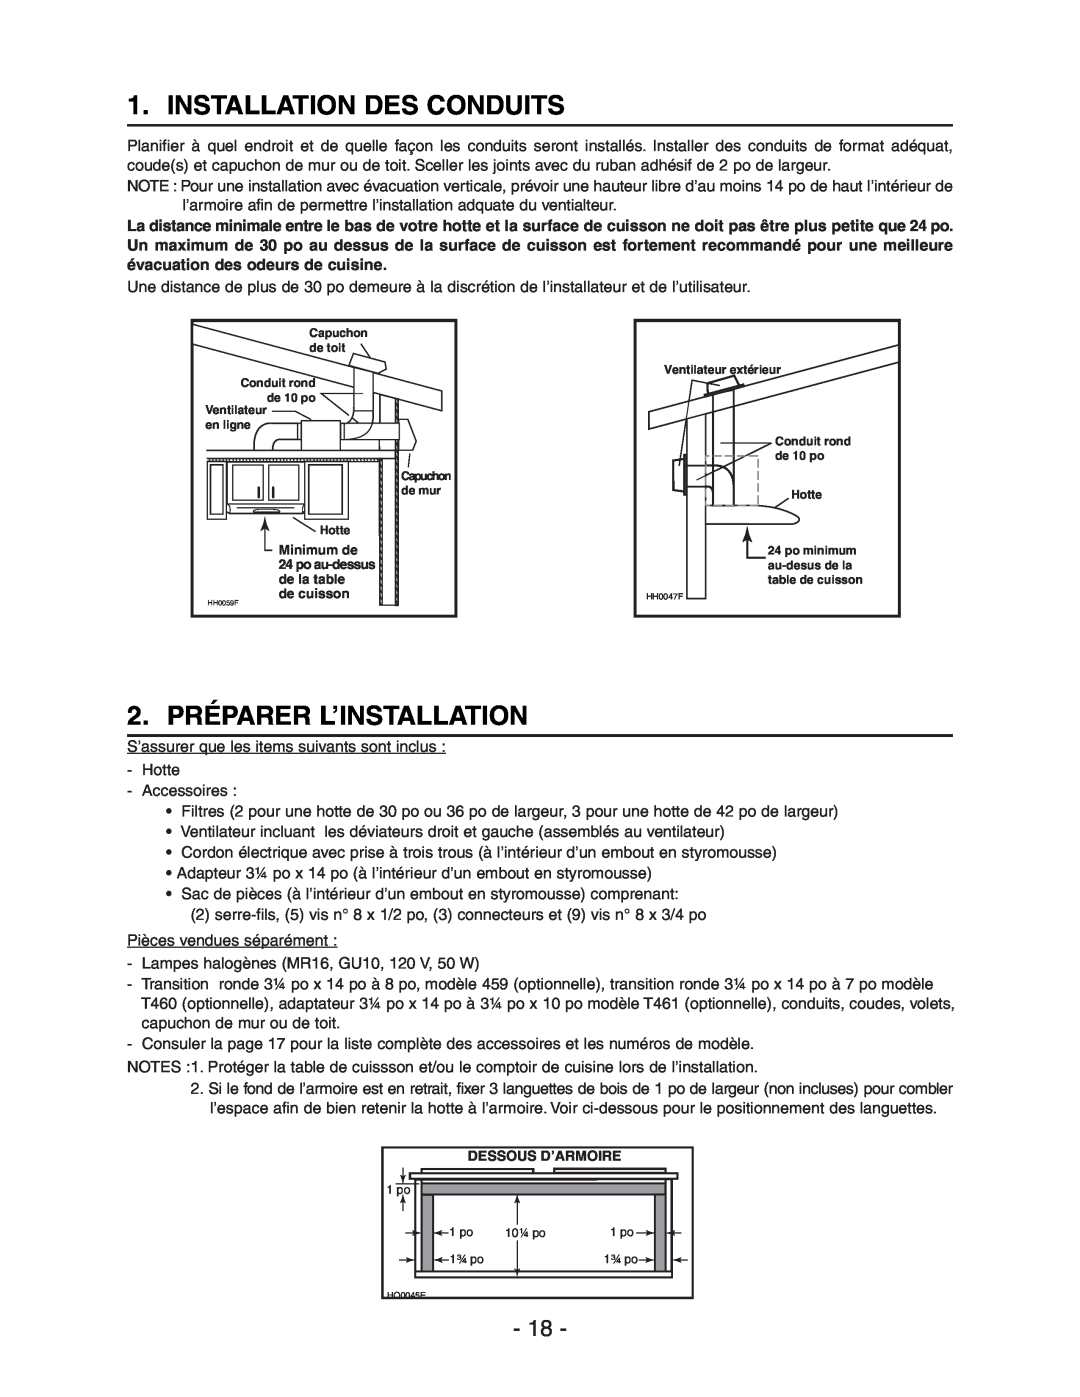 Broan Model E662 installation instructions Installation Des Conduits, 2. PRÉPARER L’INSTALLATION 